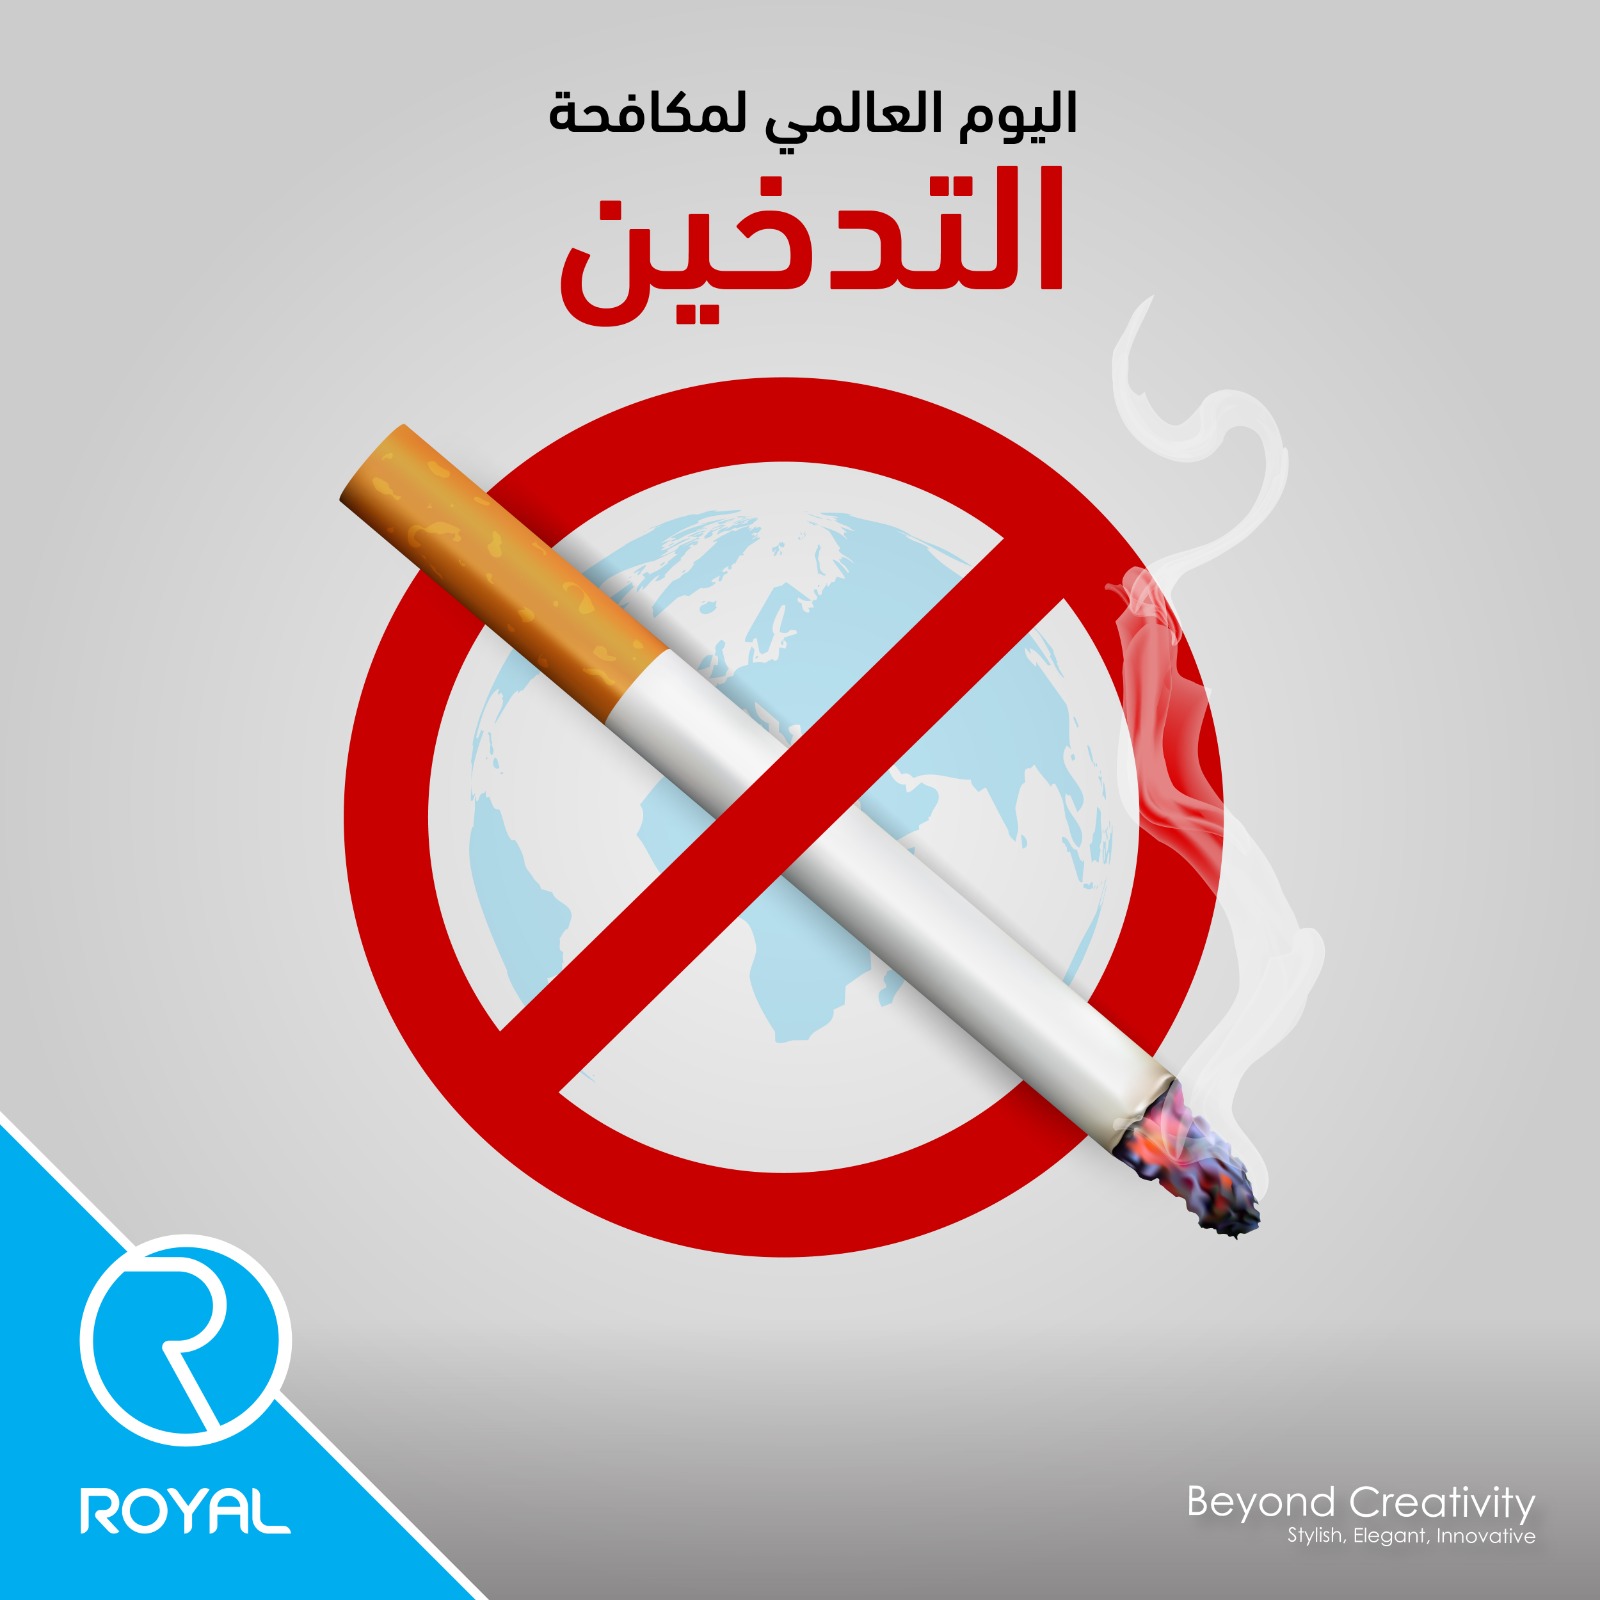 Royal celebrates the World Day to Combat Smoking